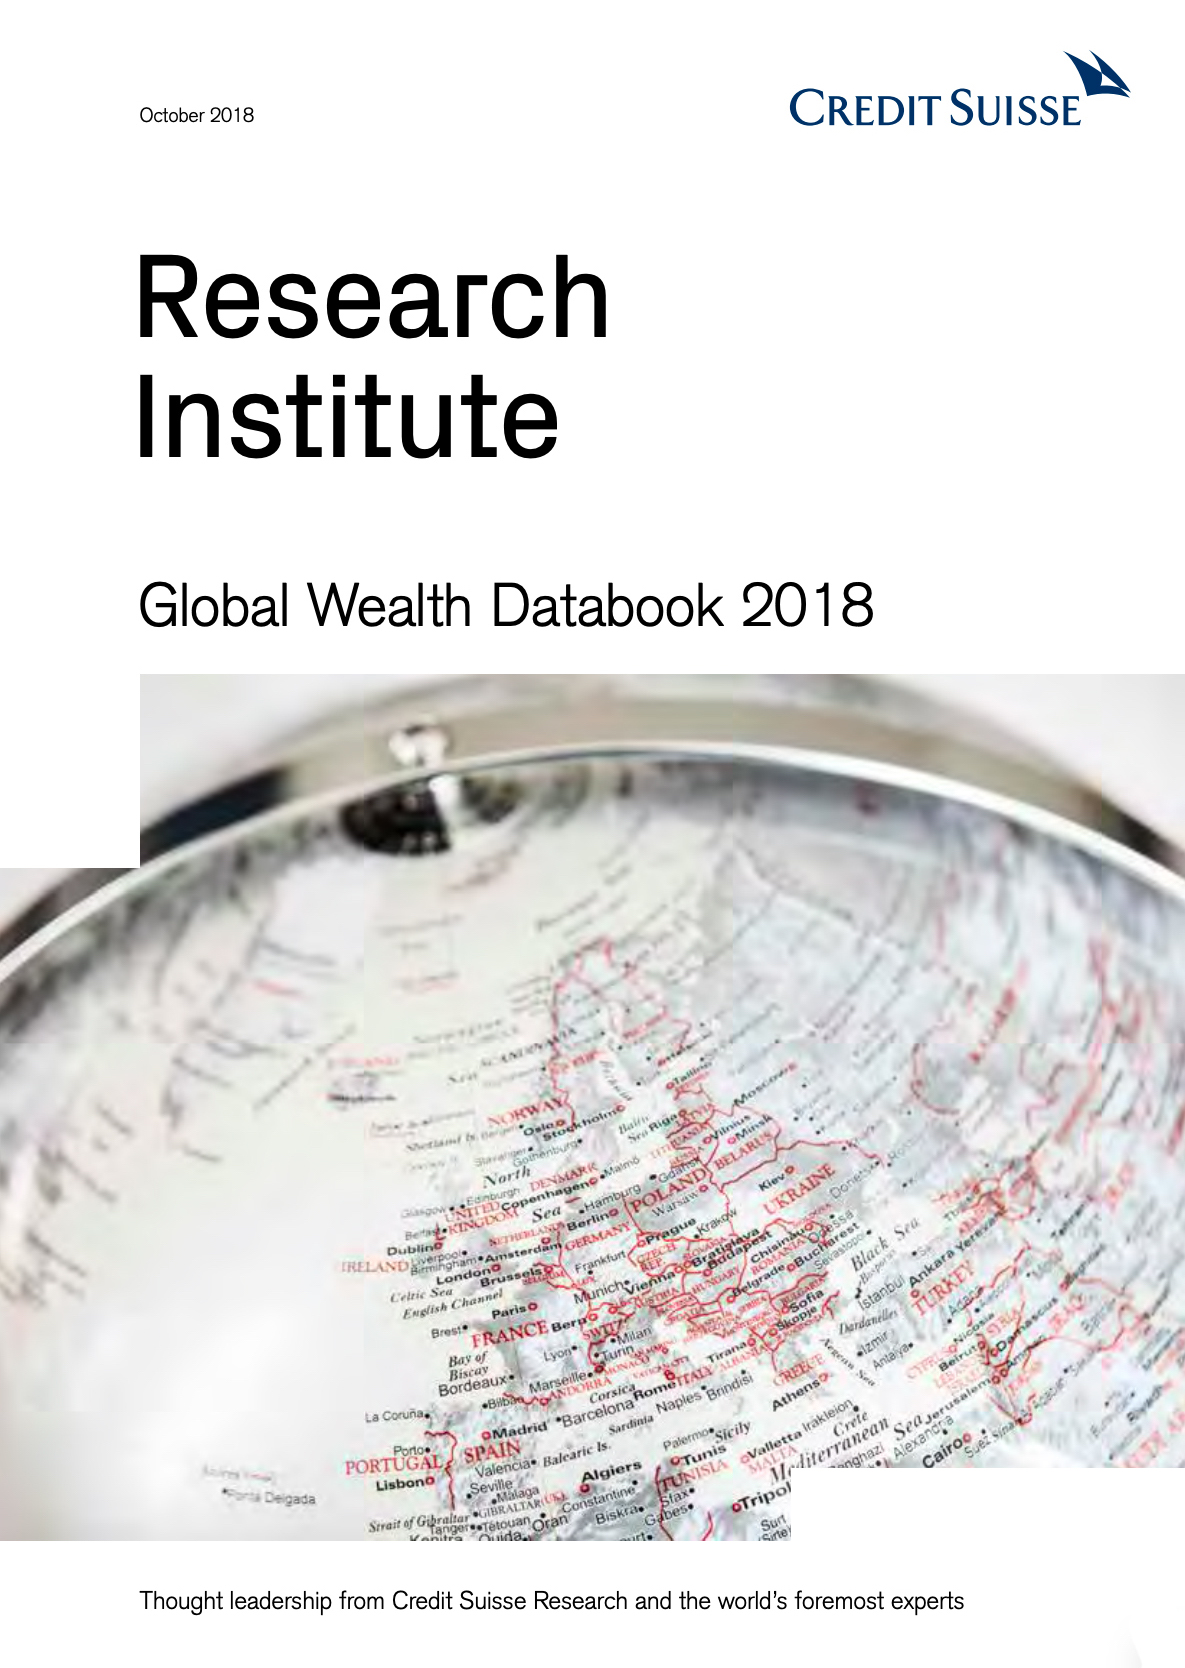 Global Wealth Databook 2018 ความเหลื่อมล้ำ ประเทศไทย ปี 2018